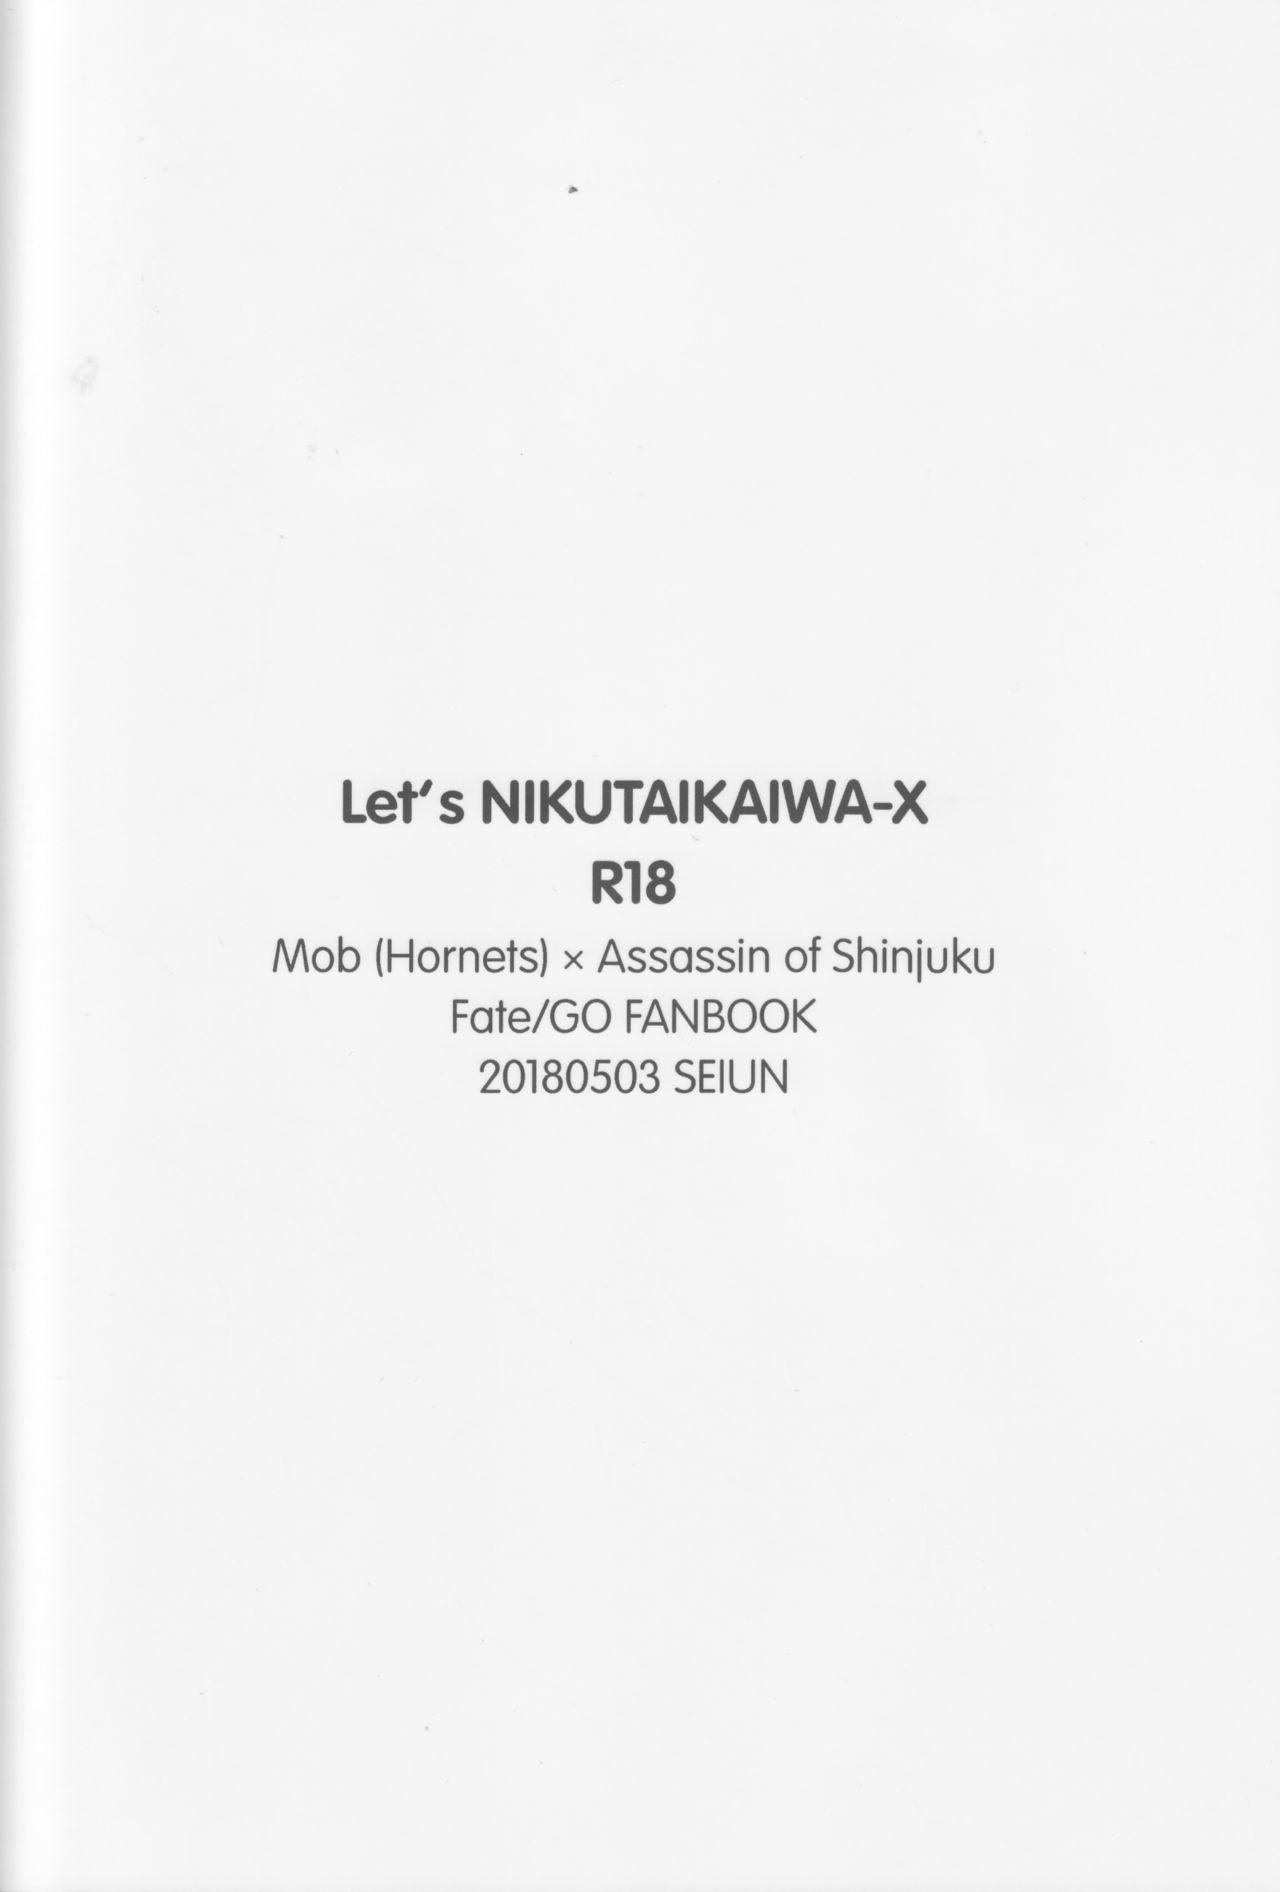 Let's NIKUTAIKAIWA-X 18